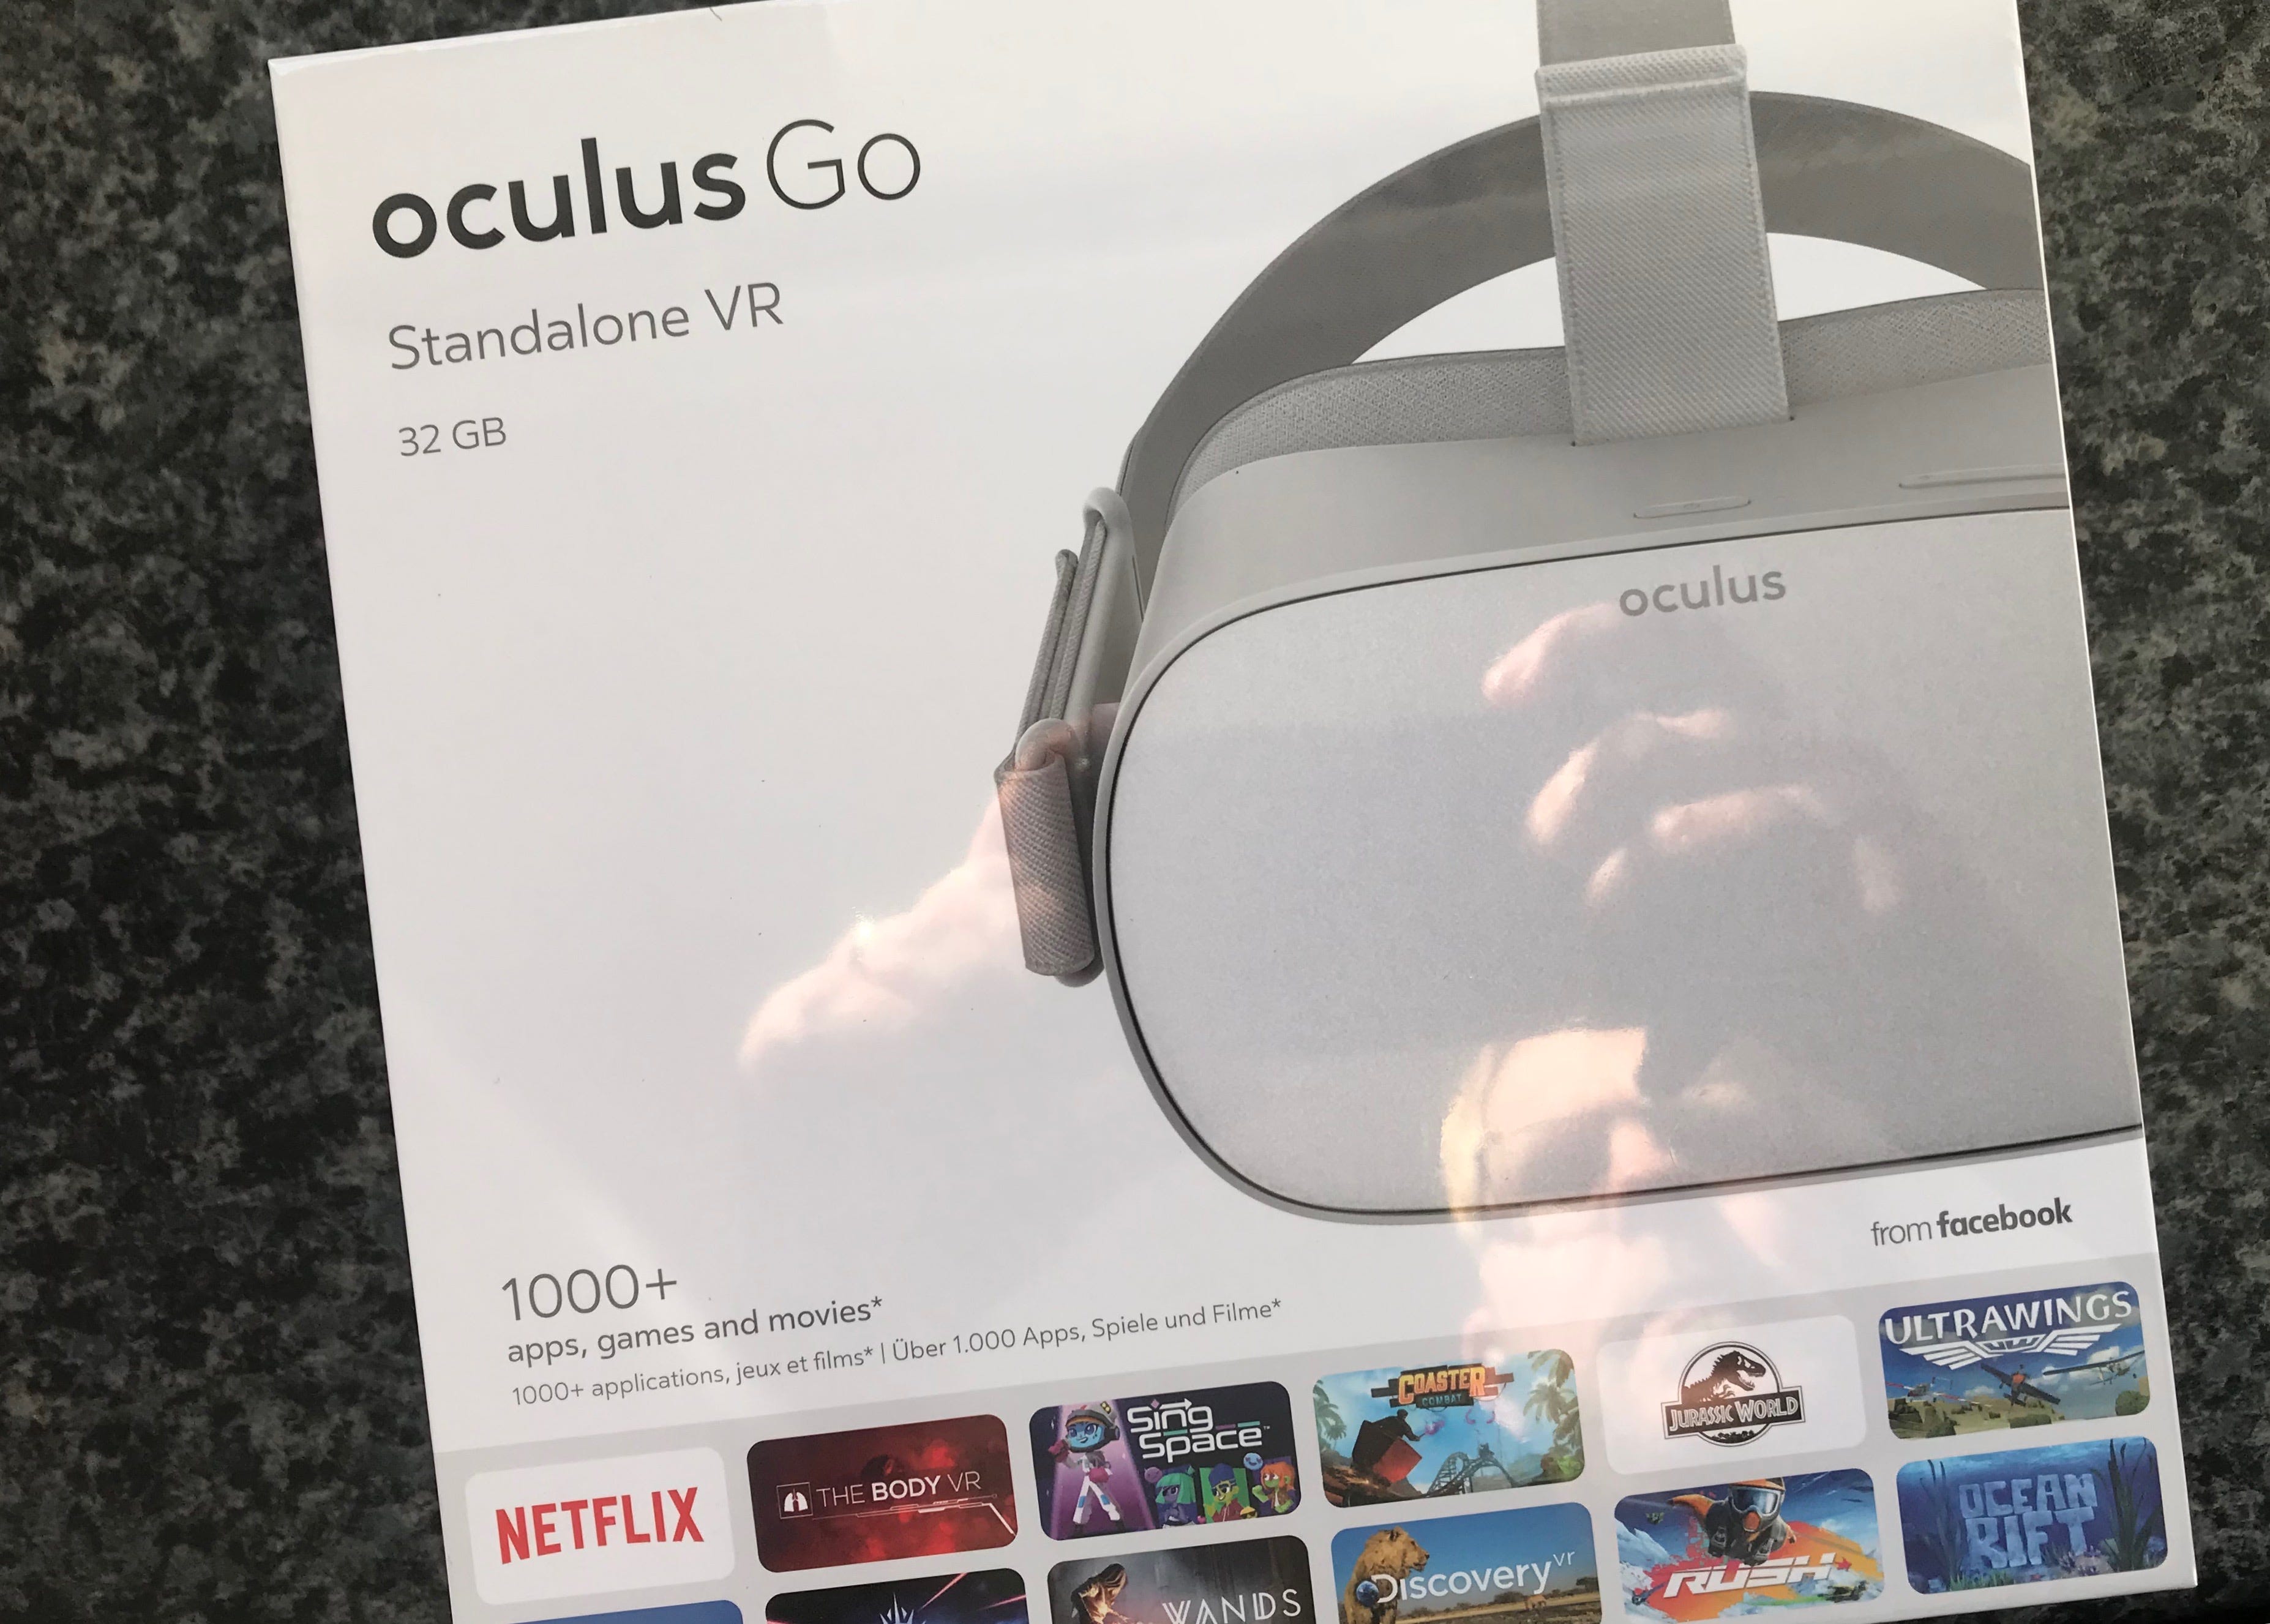 webvr oculus go